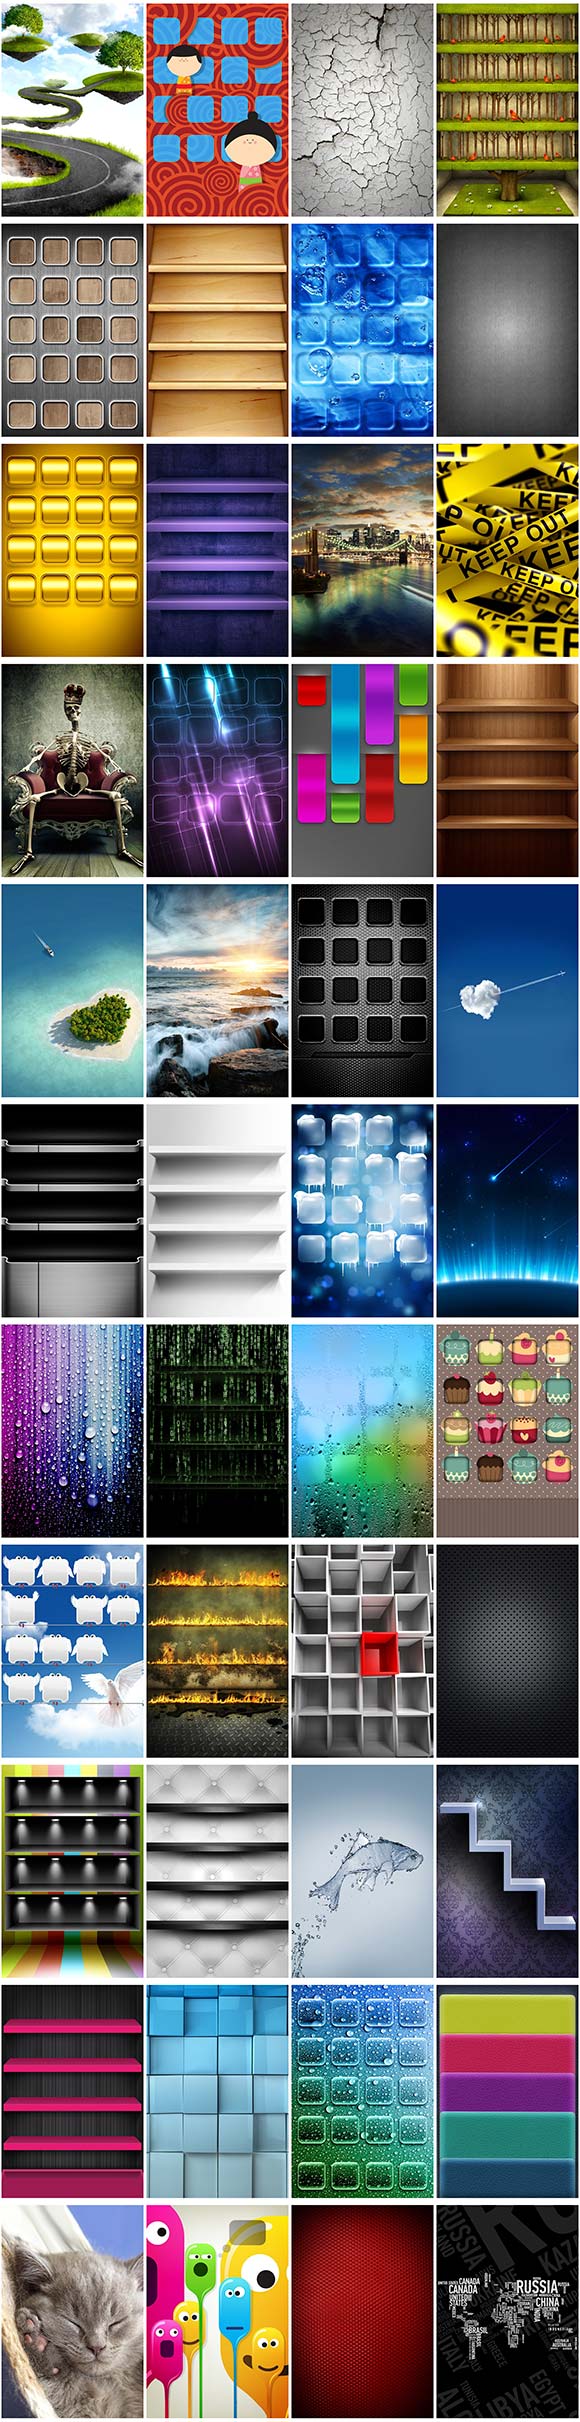 100 Melhores Wallpapers Para Iphone Na Medida Certa